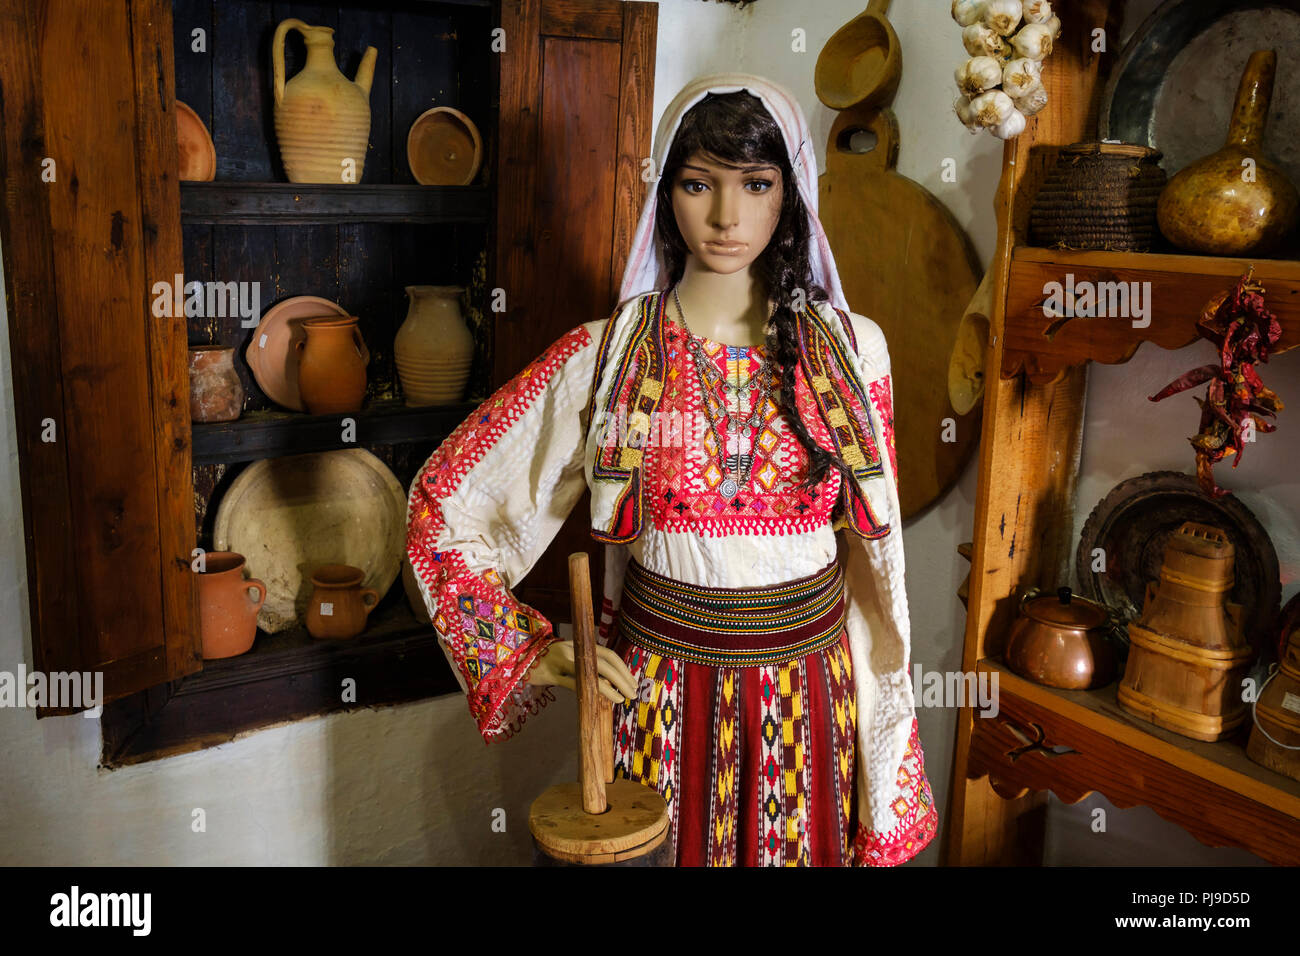 costume-ethnographic-museum-kruja-kruj-durrs-durres-albania-PJ9D5D.jpg